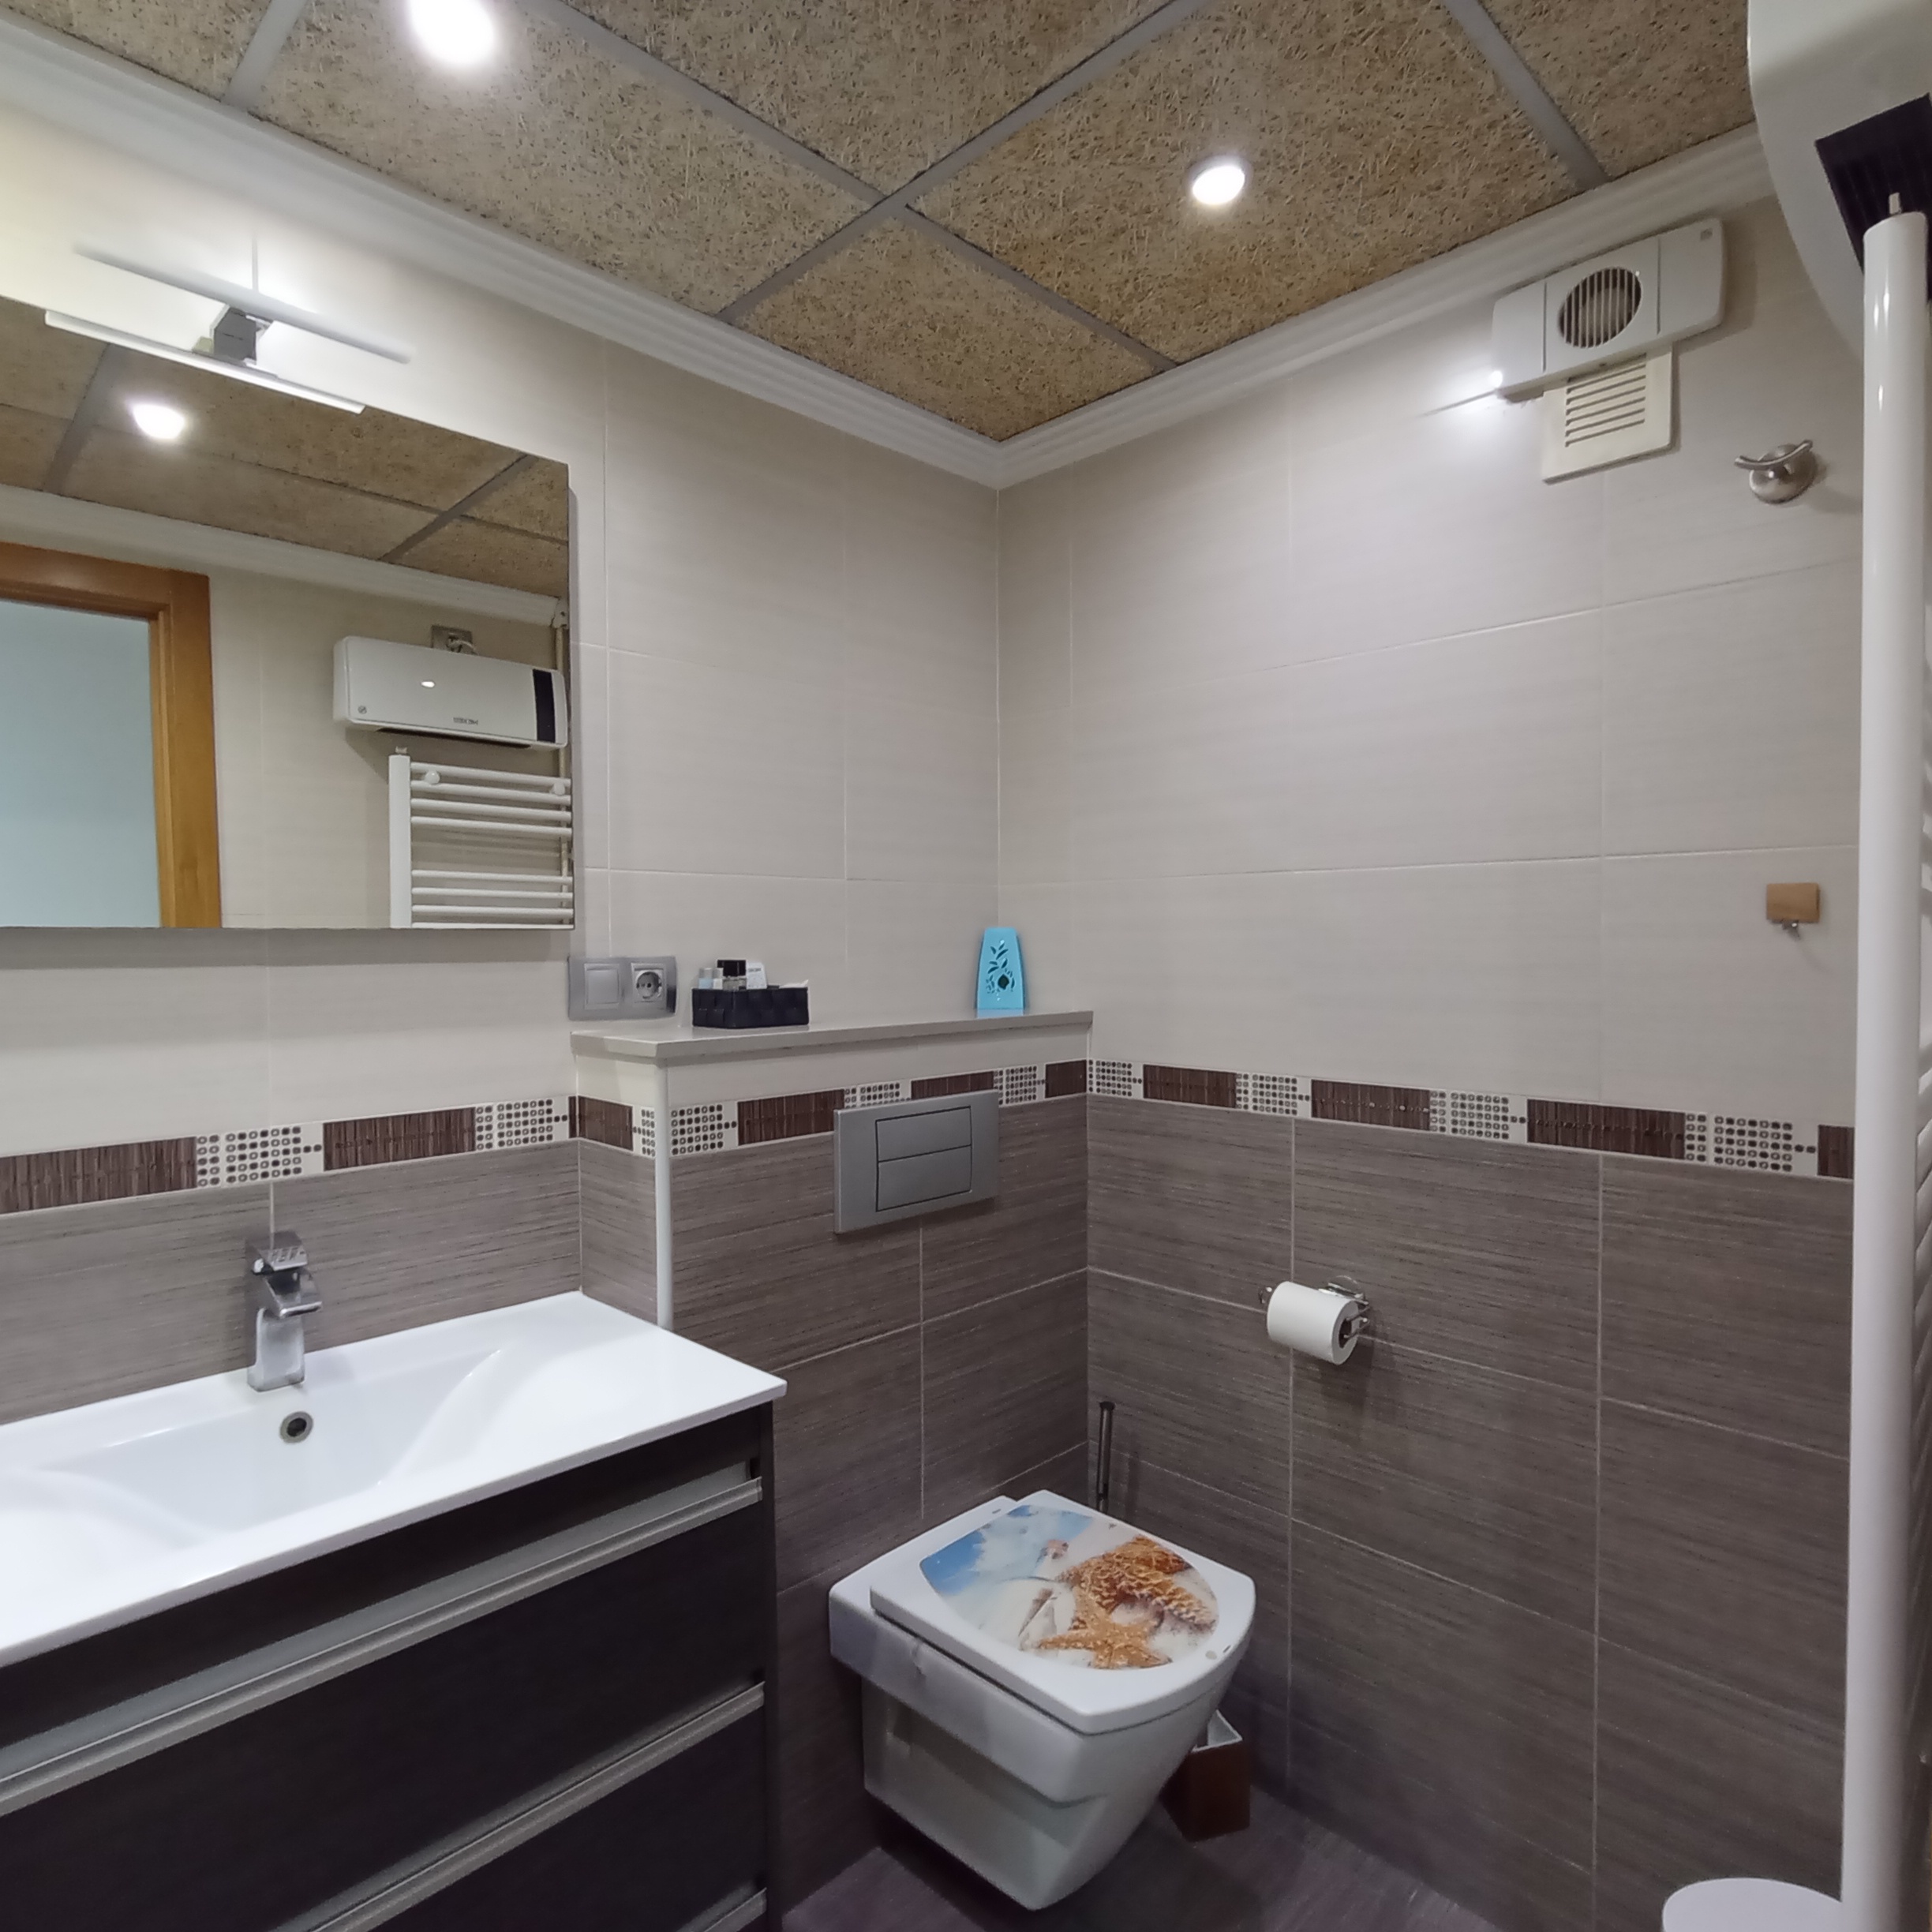 Escultor - 3 Bedroom apartment for rent in Valencia bathroom 1